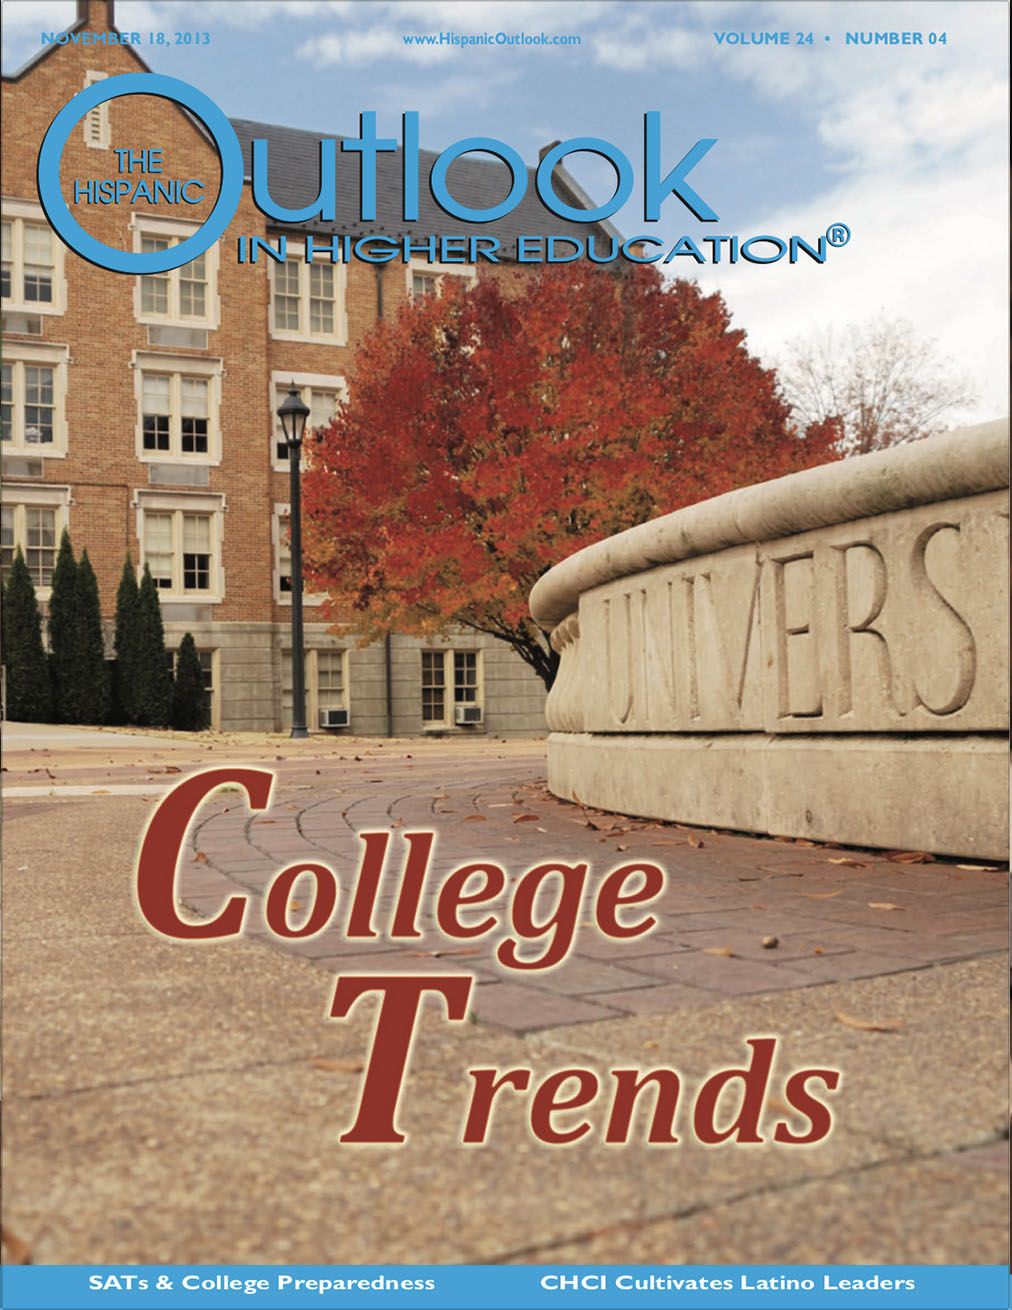 College Trends